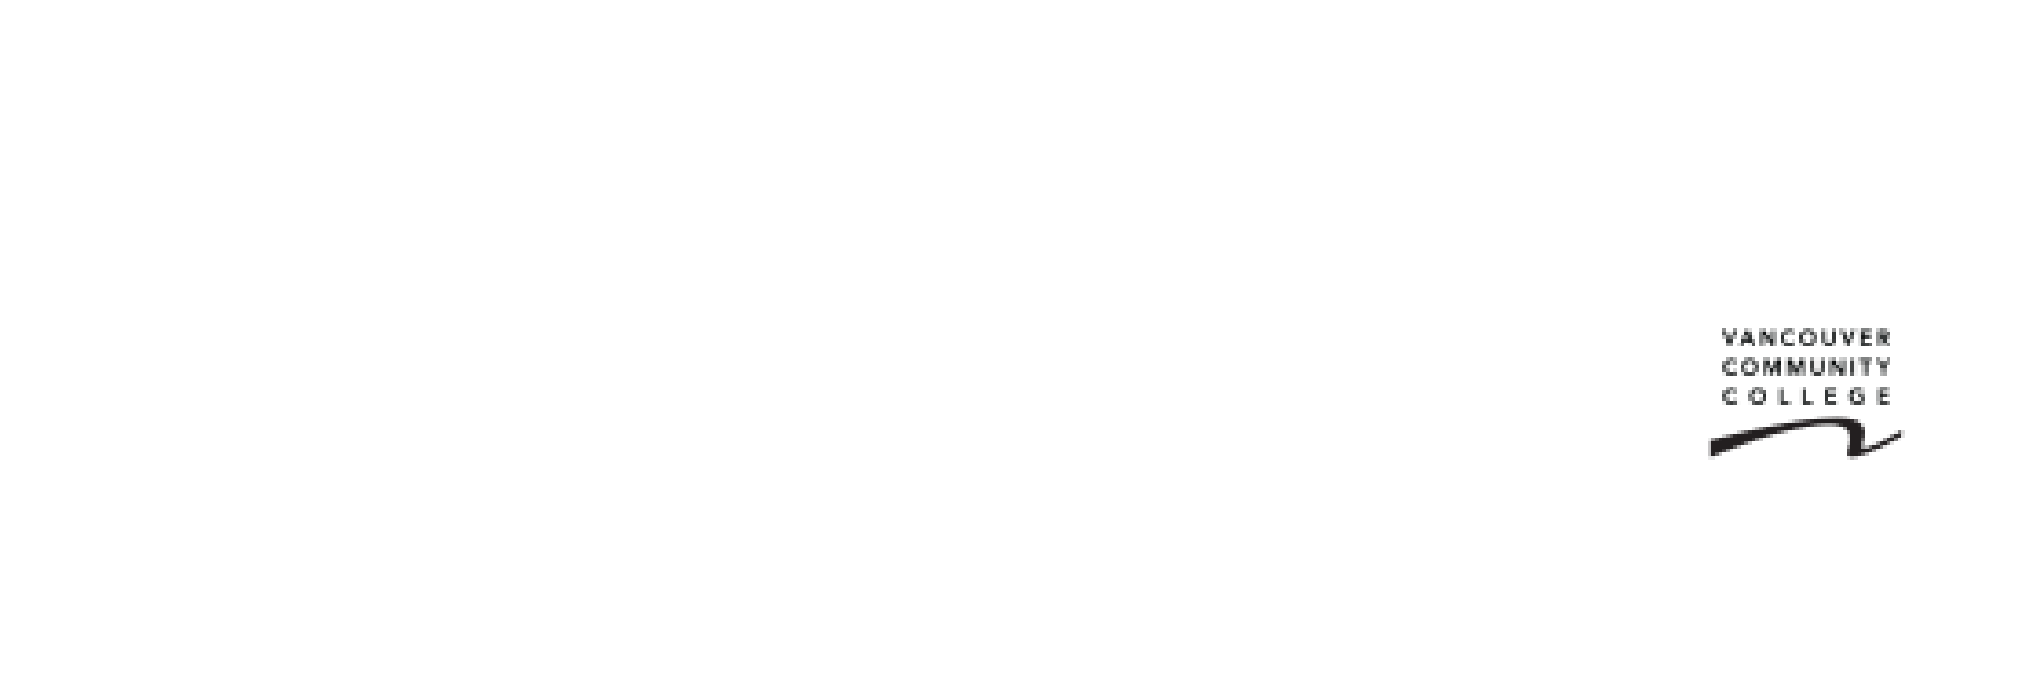 Pacific link college - PLC